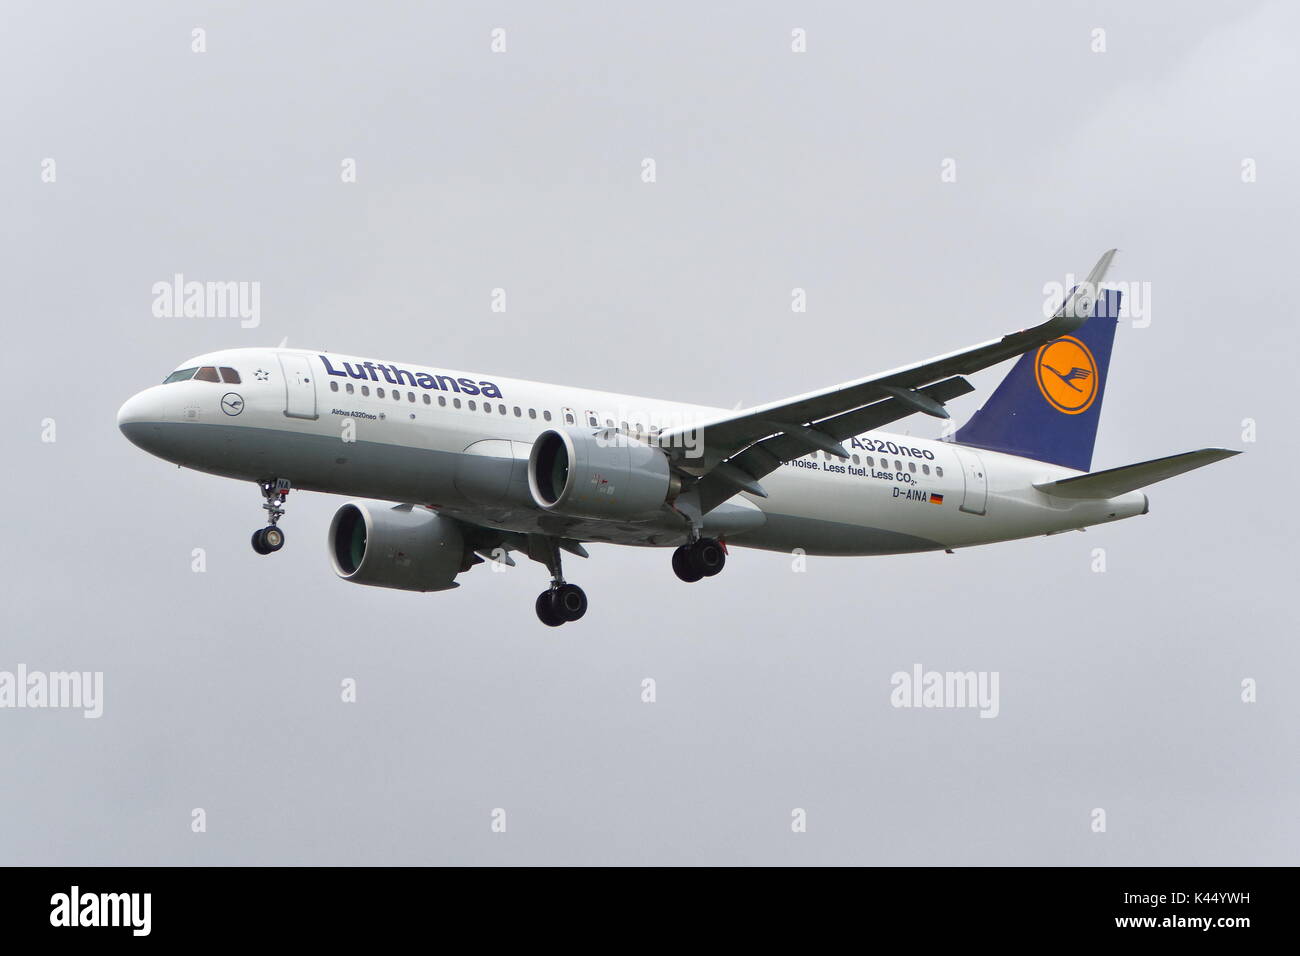 Lufthansa Airbus A320-271N D-AINA landing at London Heathrow Airport, UK Stock Photo